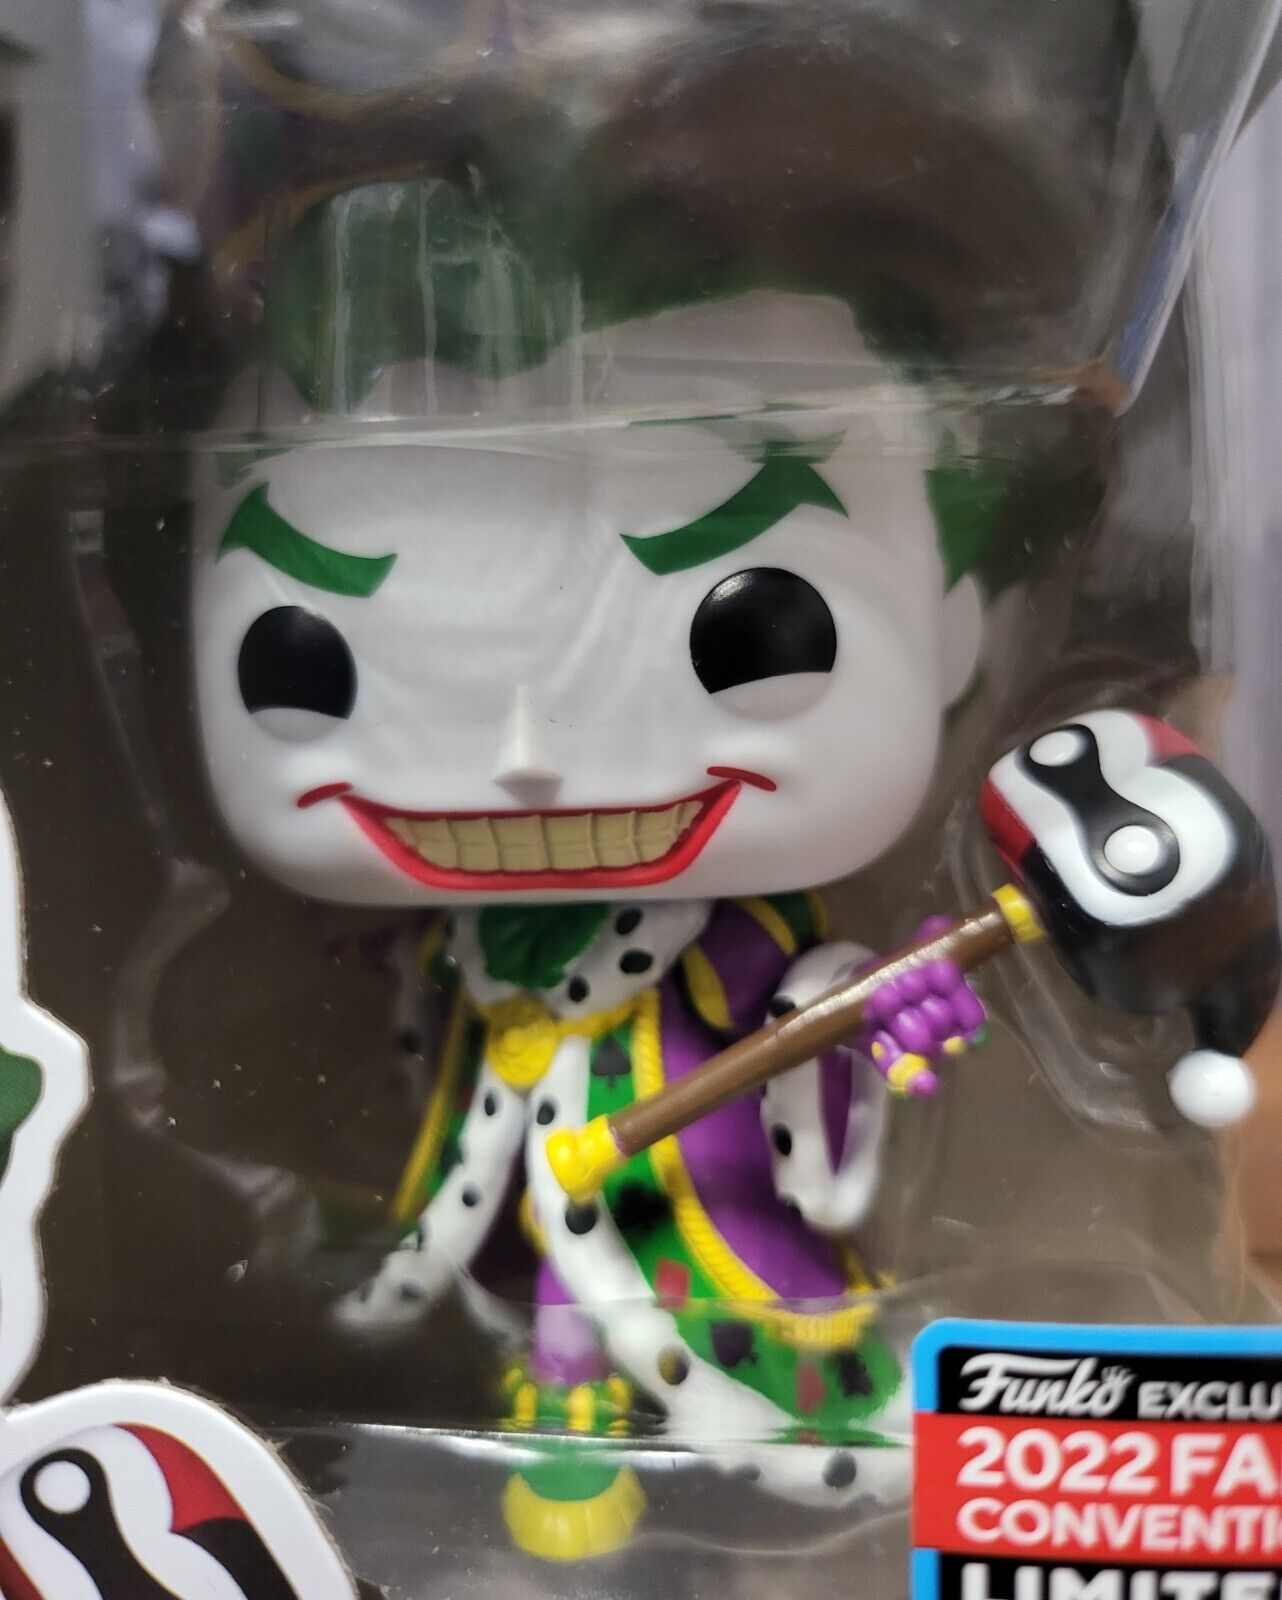 Funko Pop! Heroes Emperor The Joker fall Con 2022 #457 exclusive - Ricky's Garage